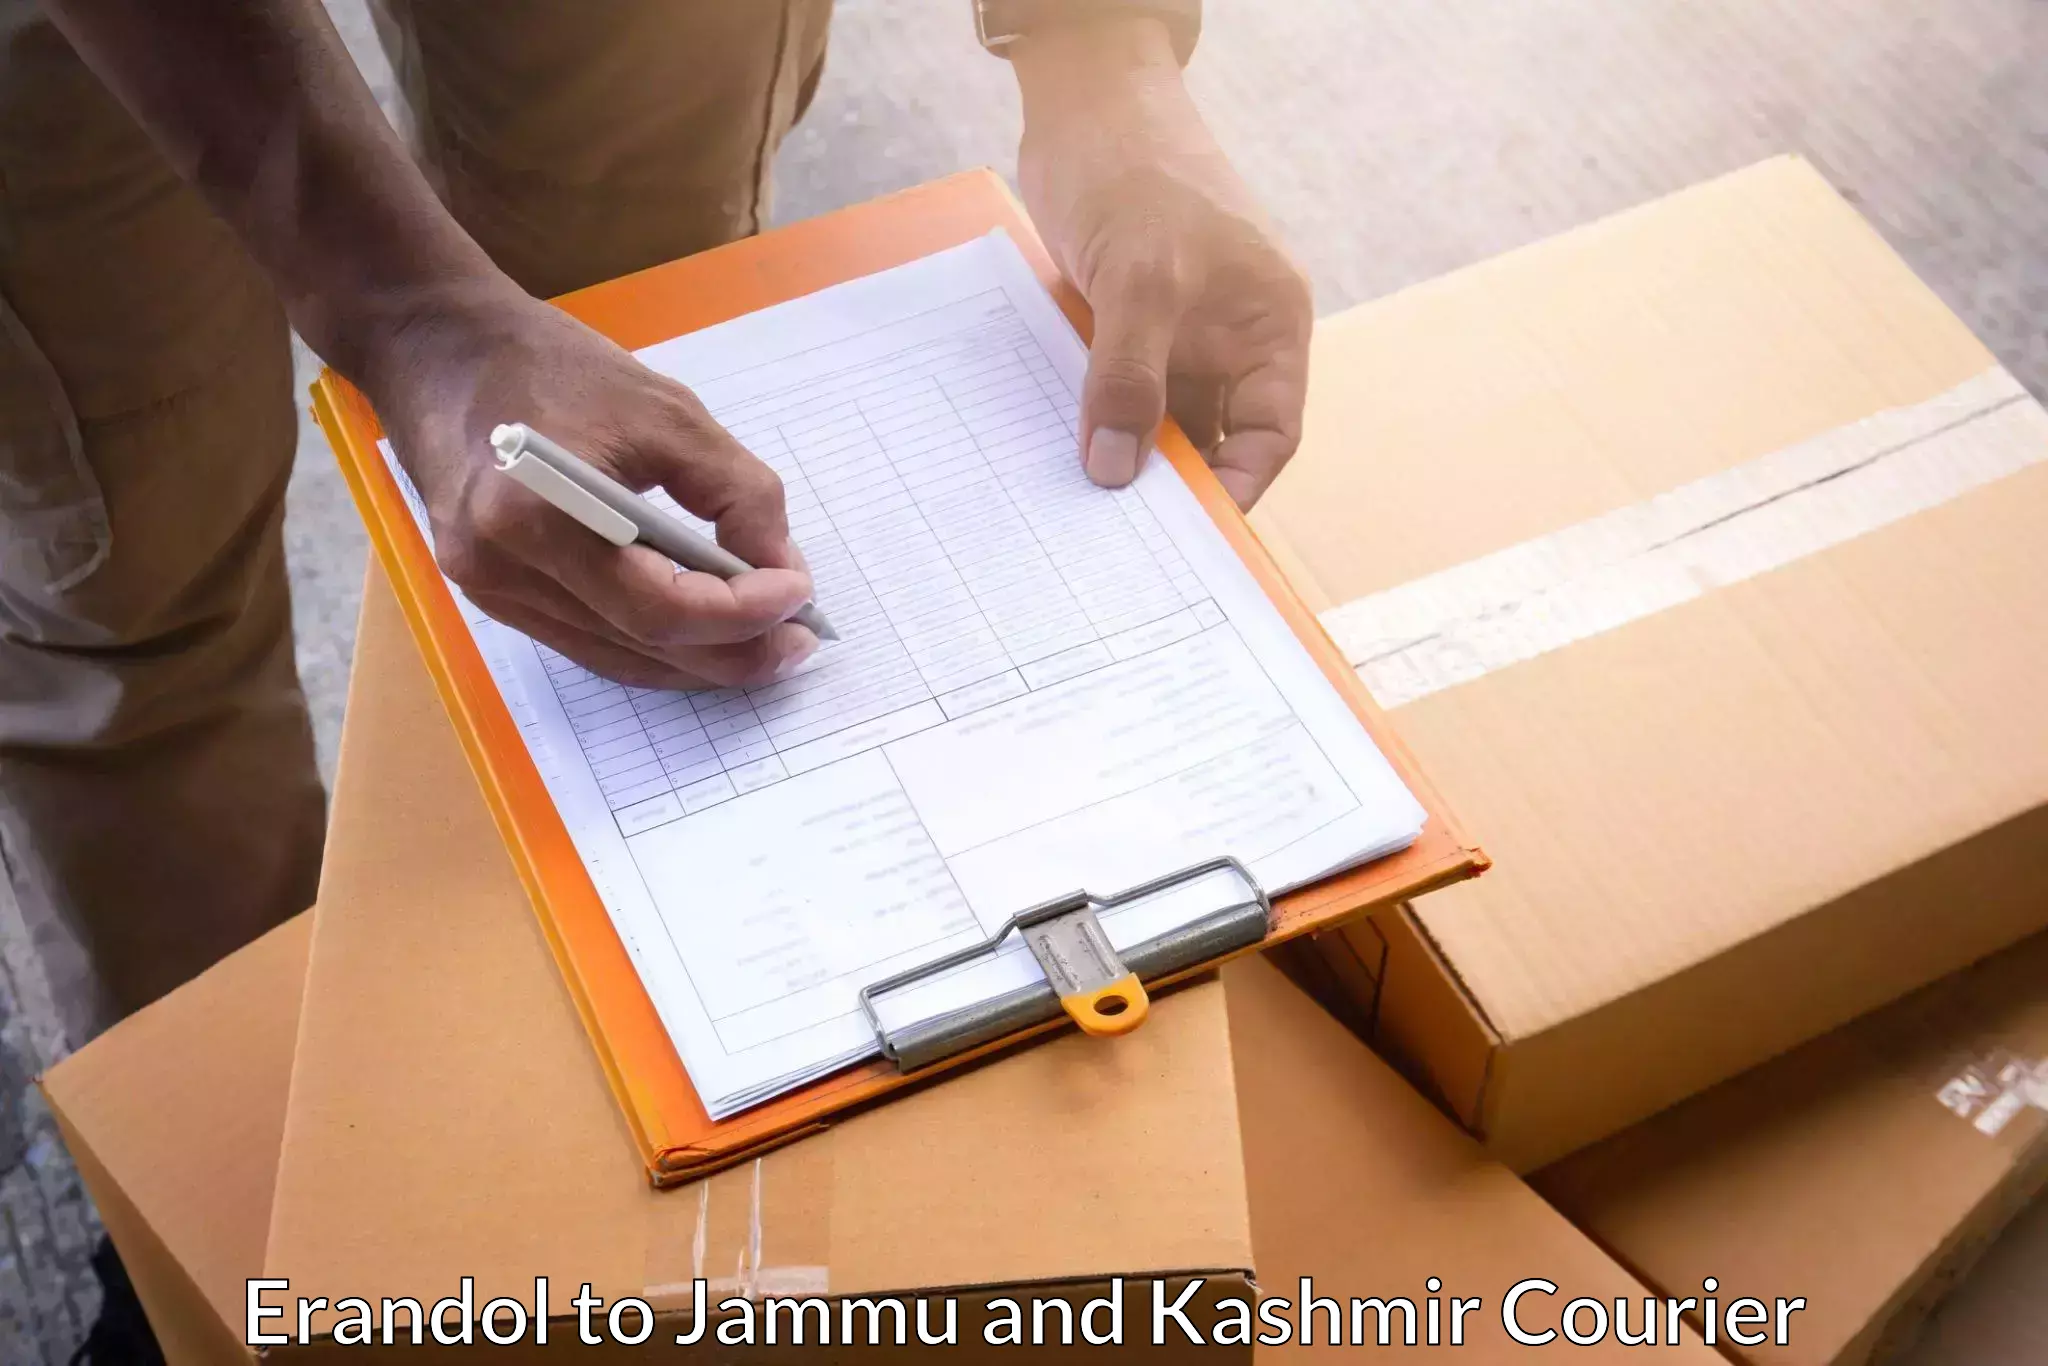 24-hour delivery options Erandol to Jammu and Kashmir